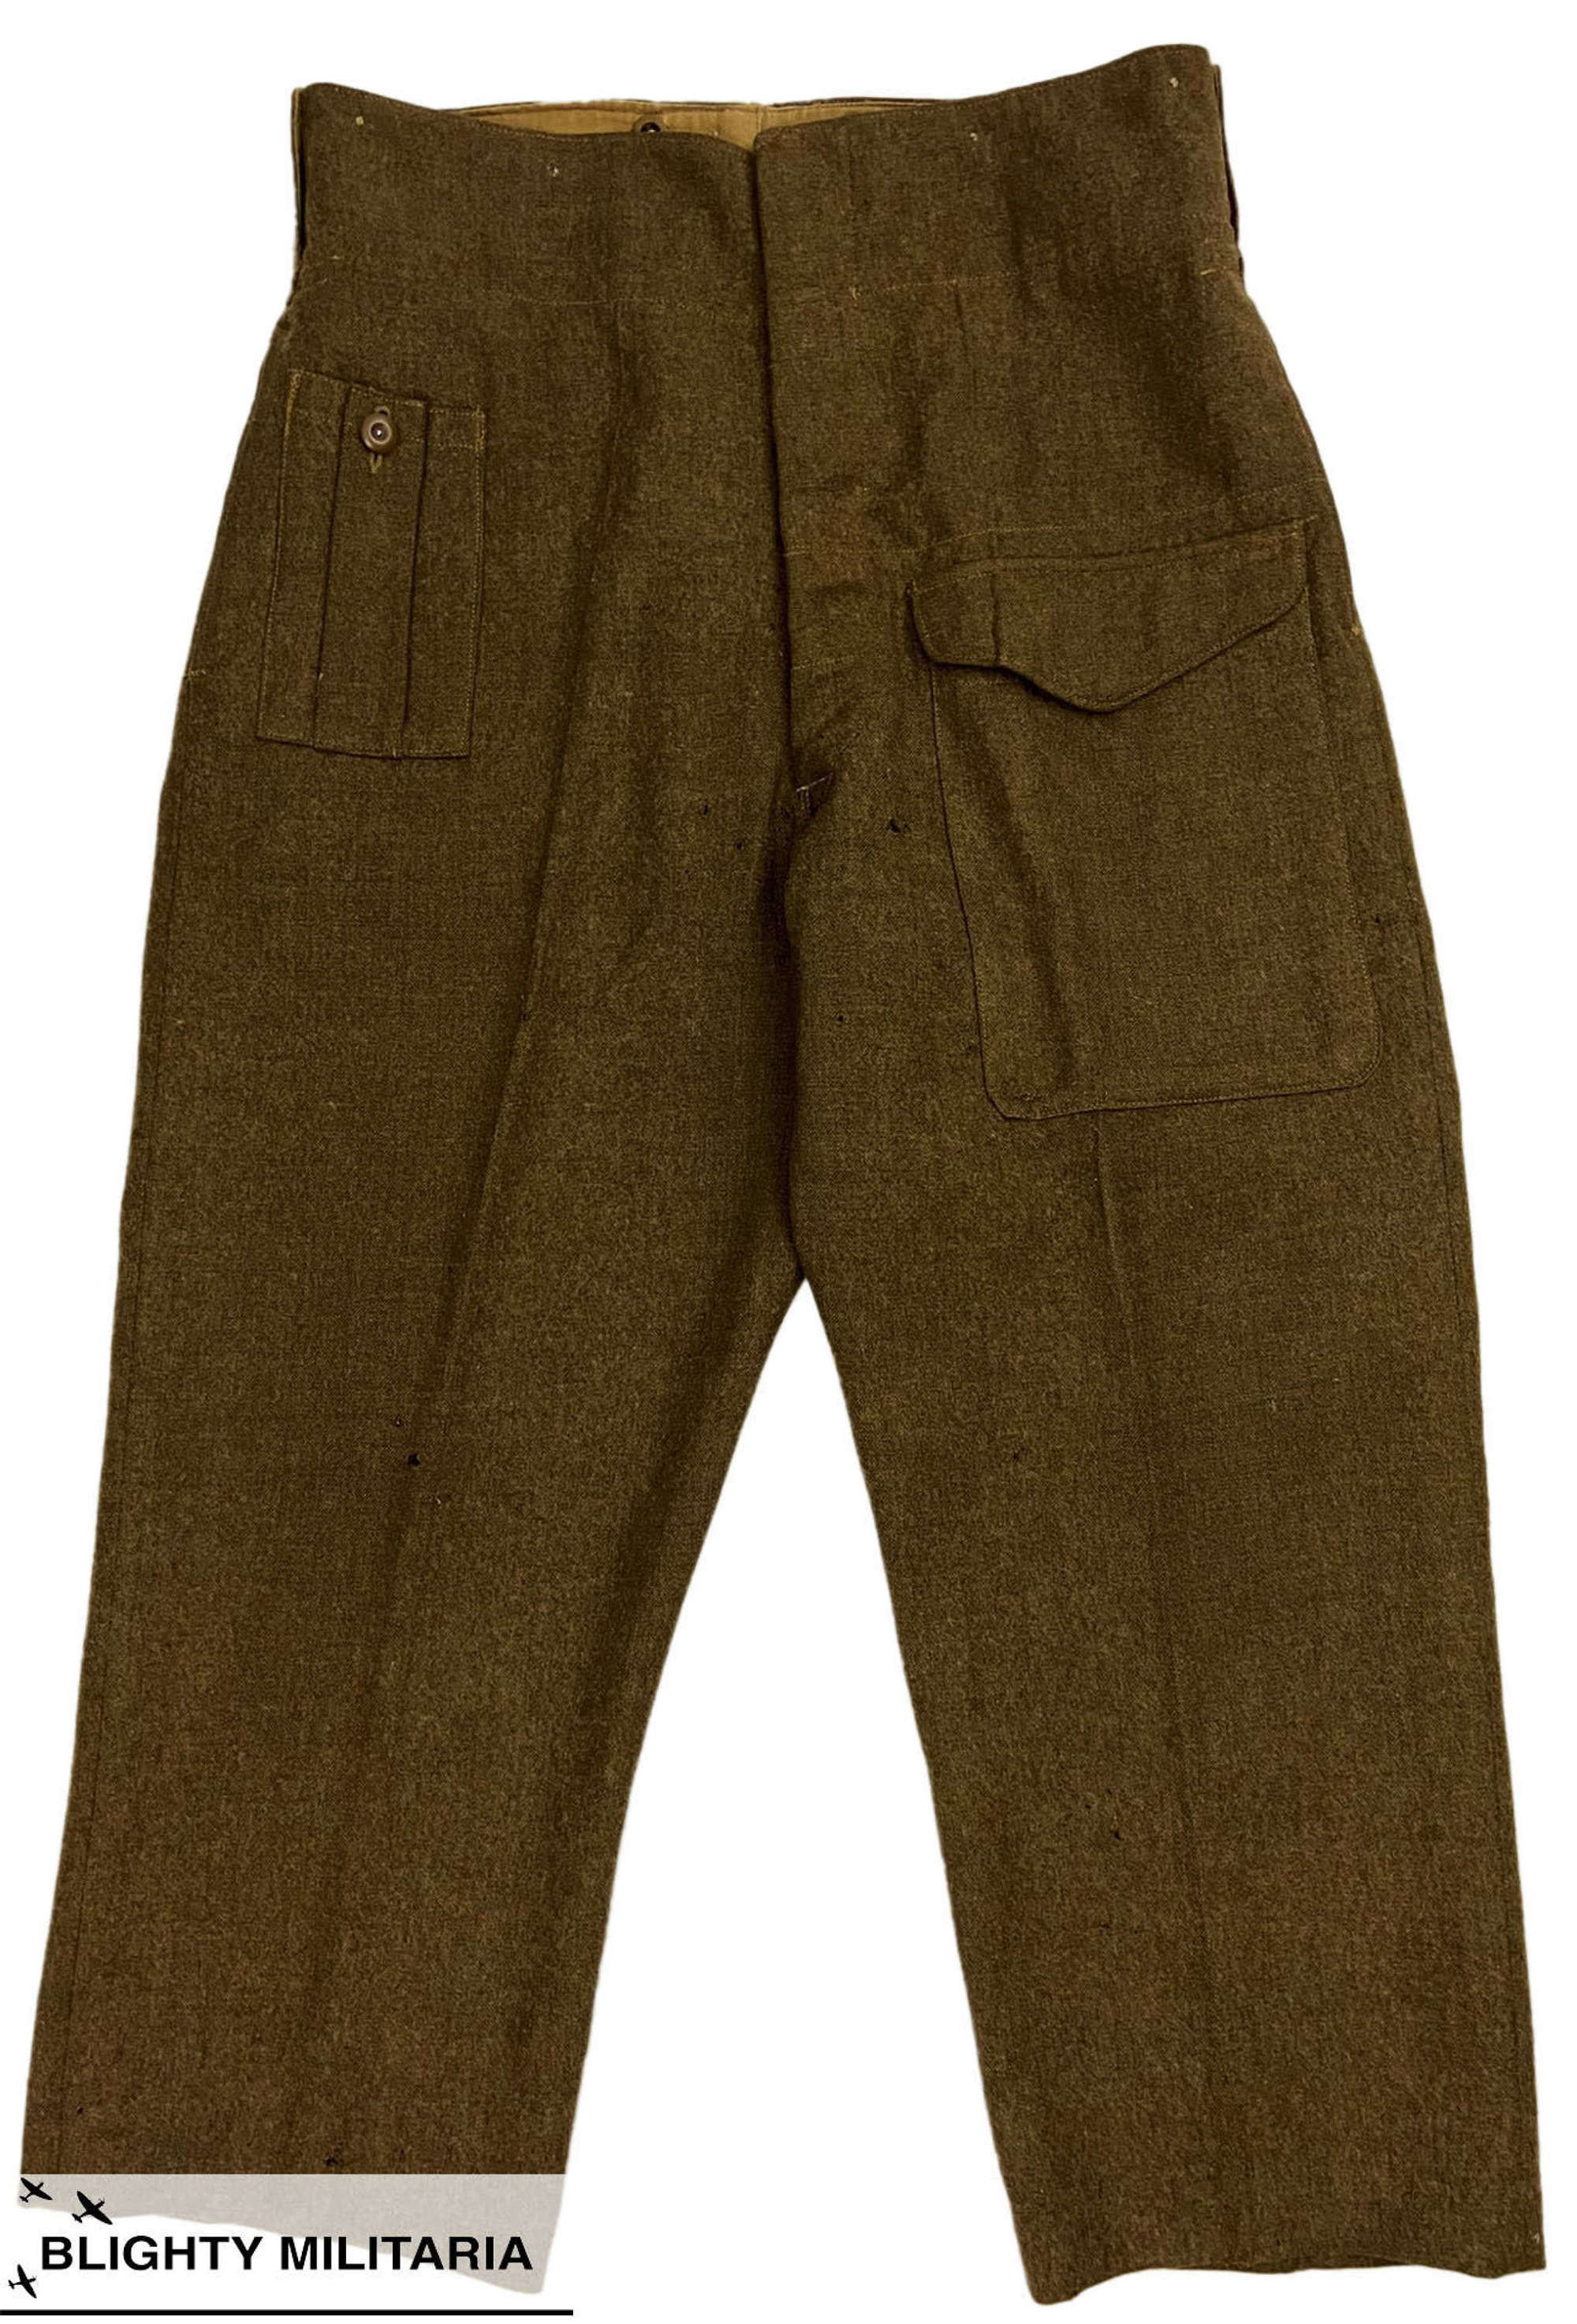 Original 1942 Dated 1940 Pattern Battledress Trousers - Size 18